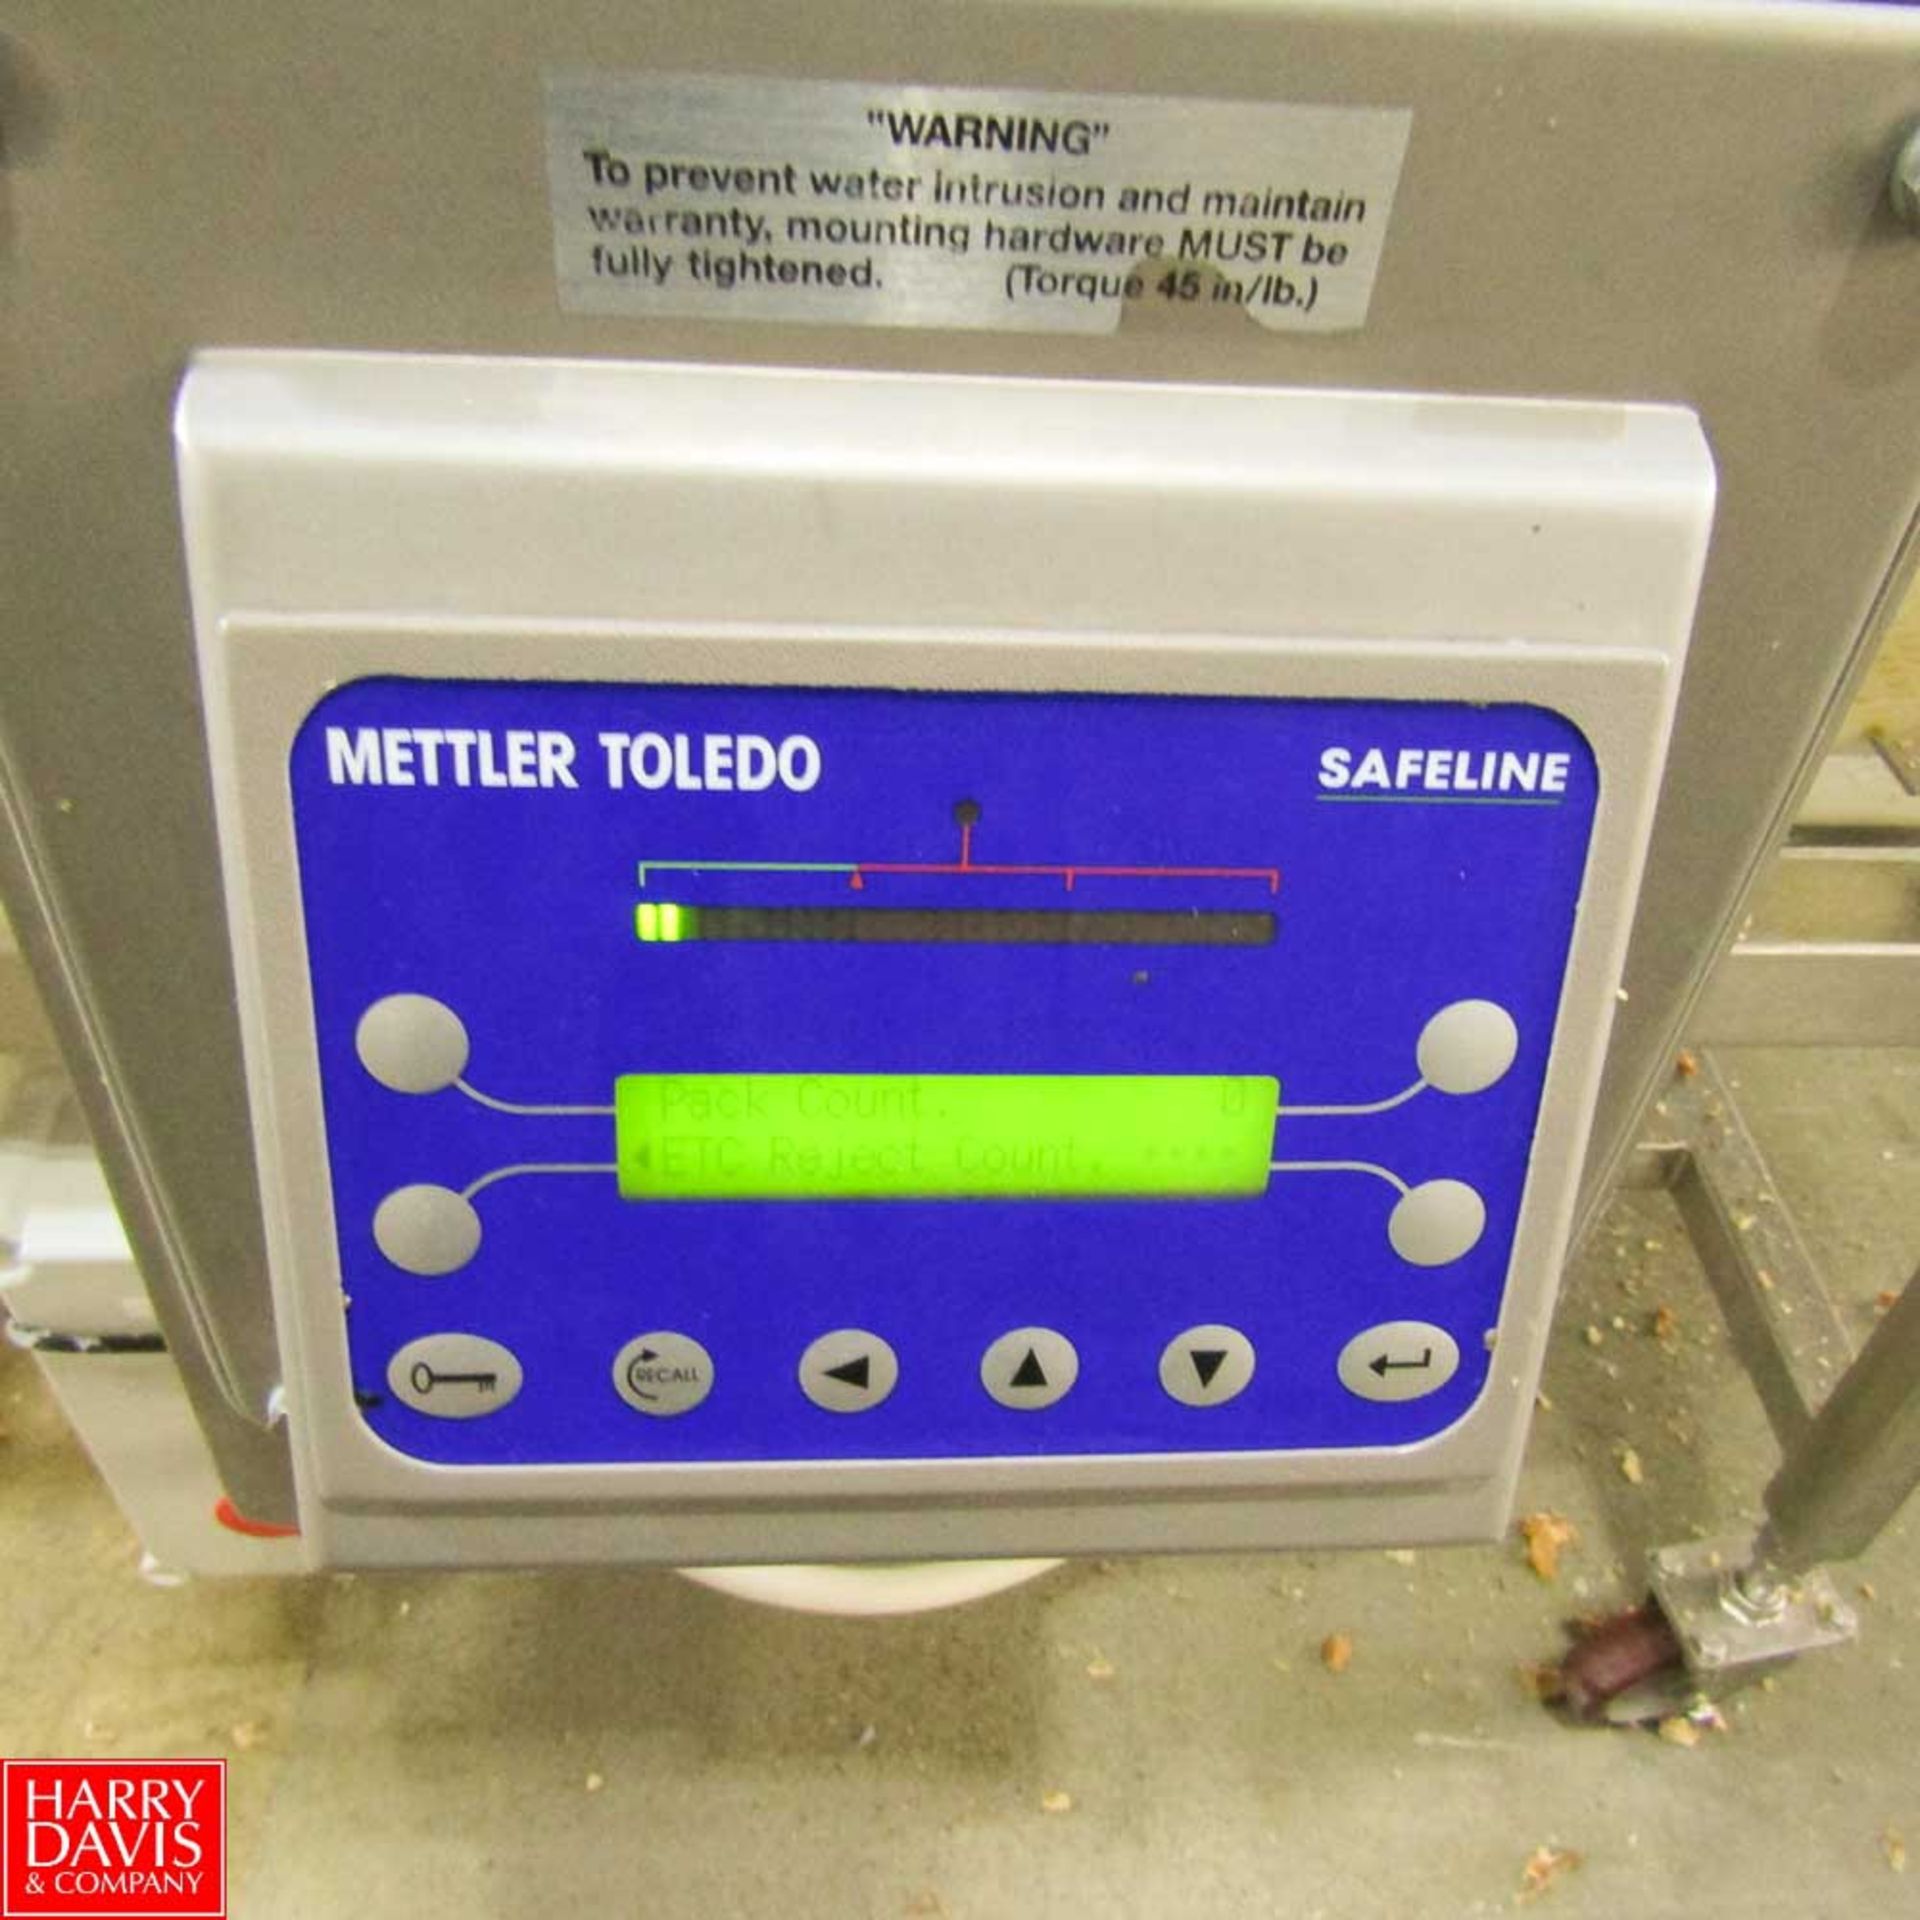 Mettler Toledo Safeline Metal Detector Rigging Fee: 150 - Image 2 of 2